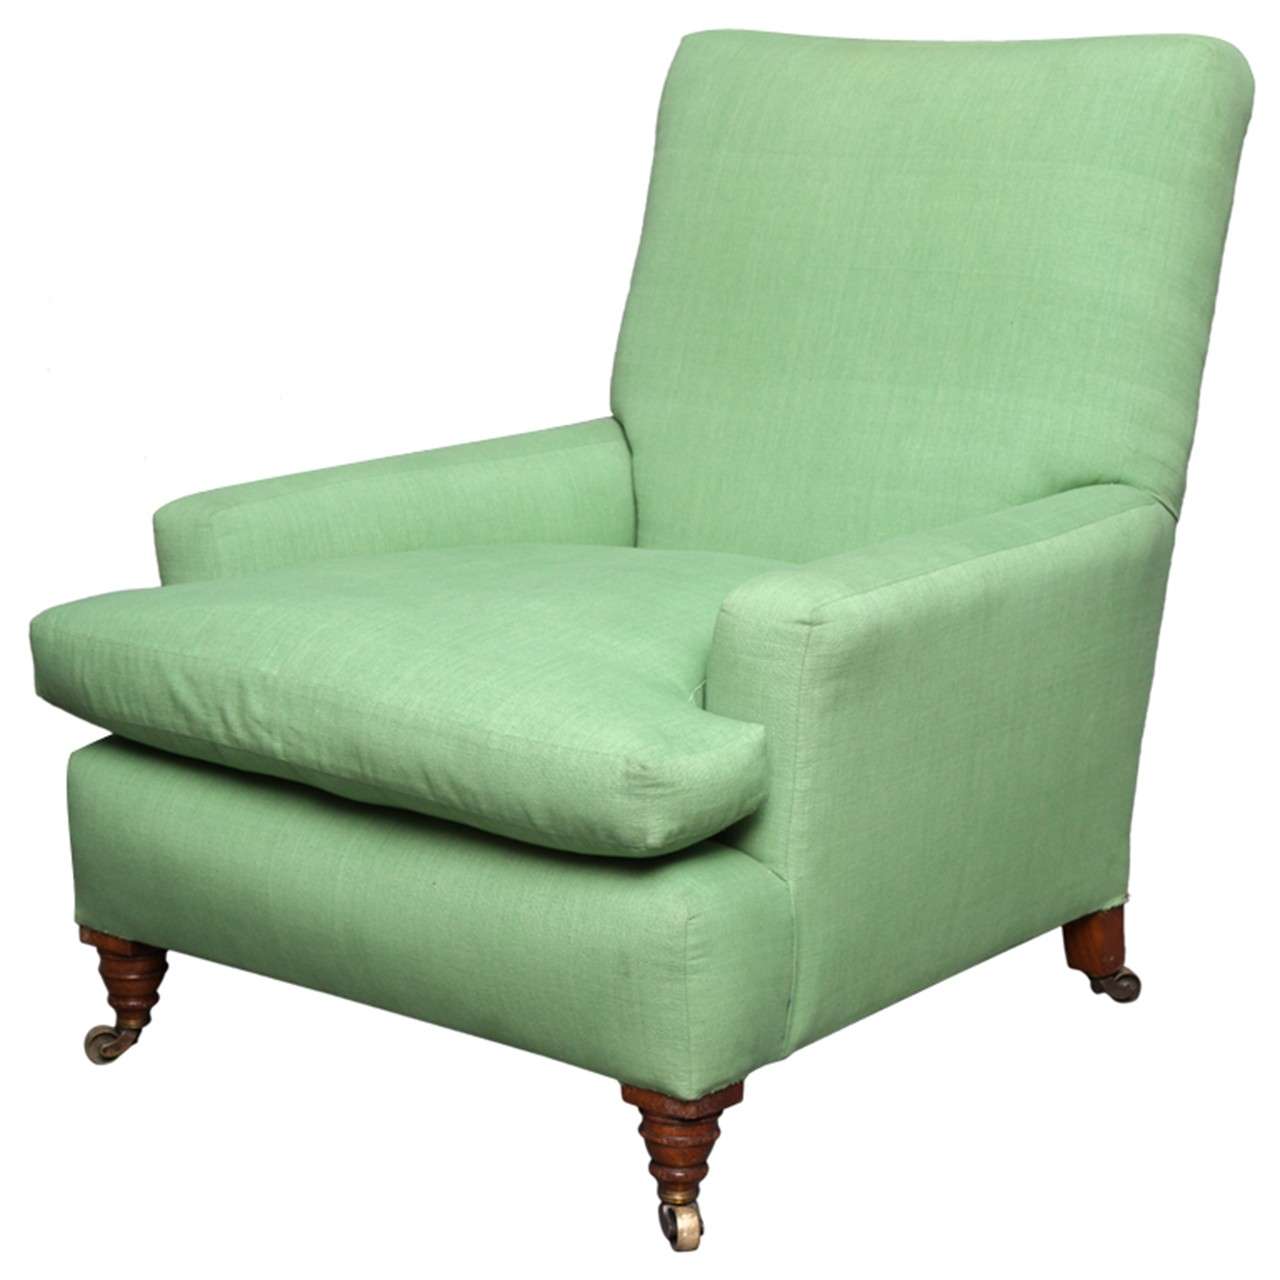 English Club Chair in Green Linen